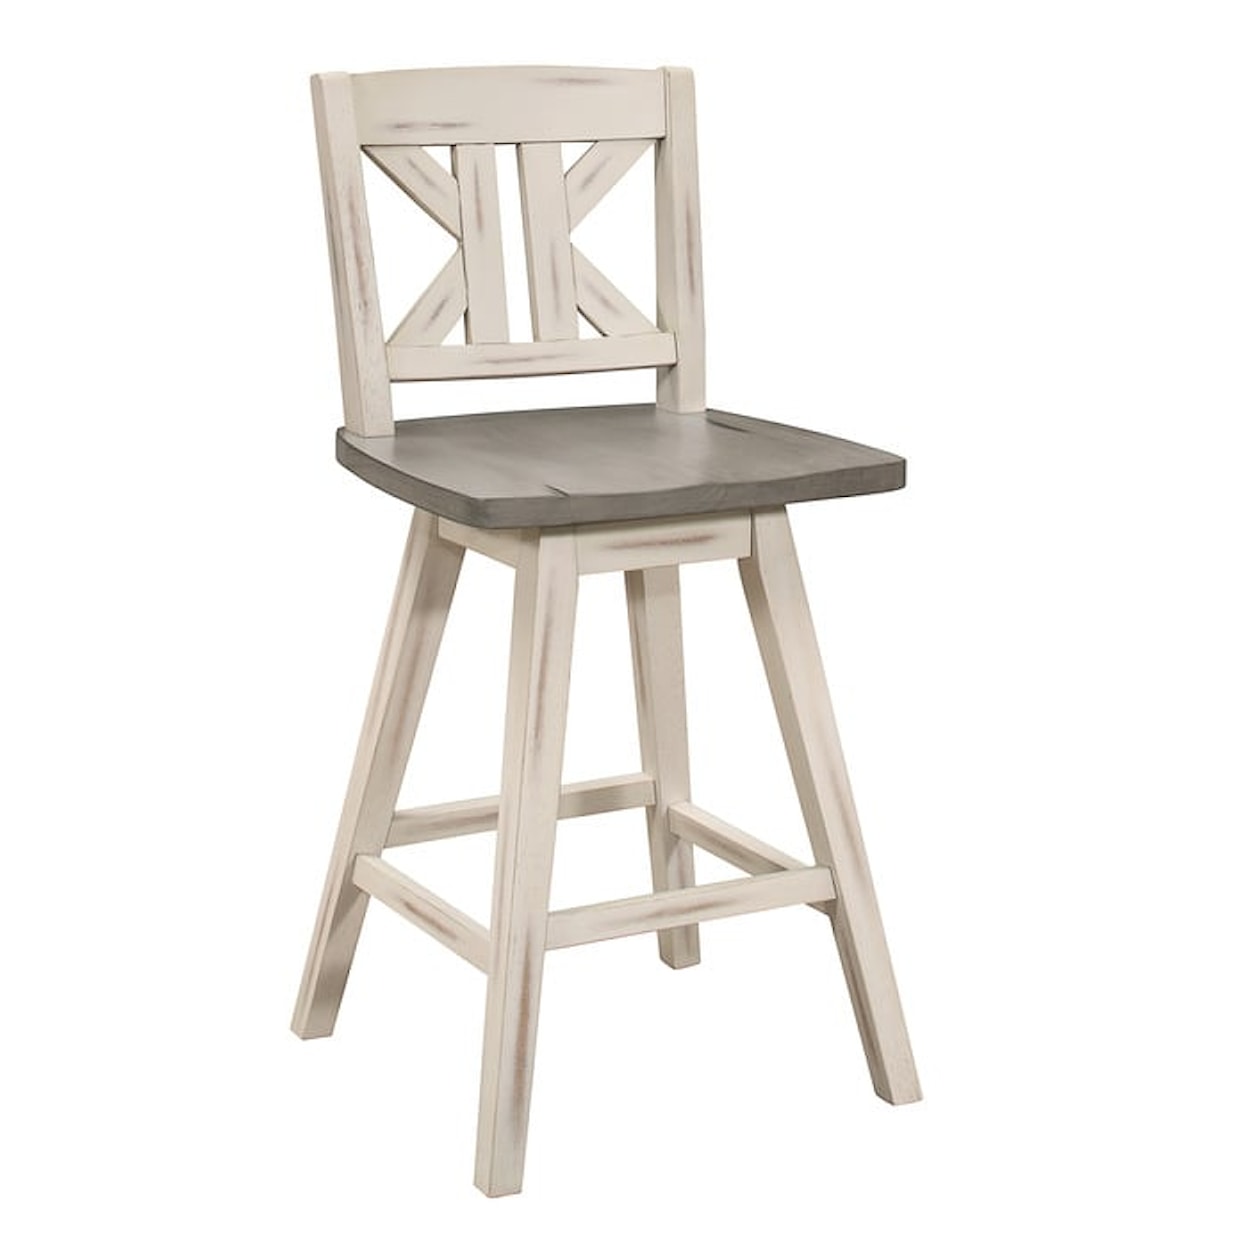 Homelegance Amsonia Counter Height Swivel Chair